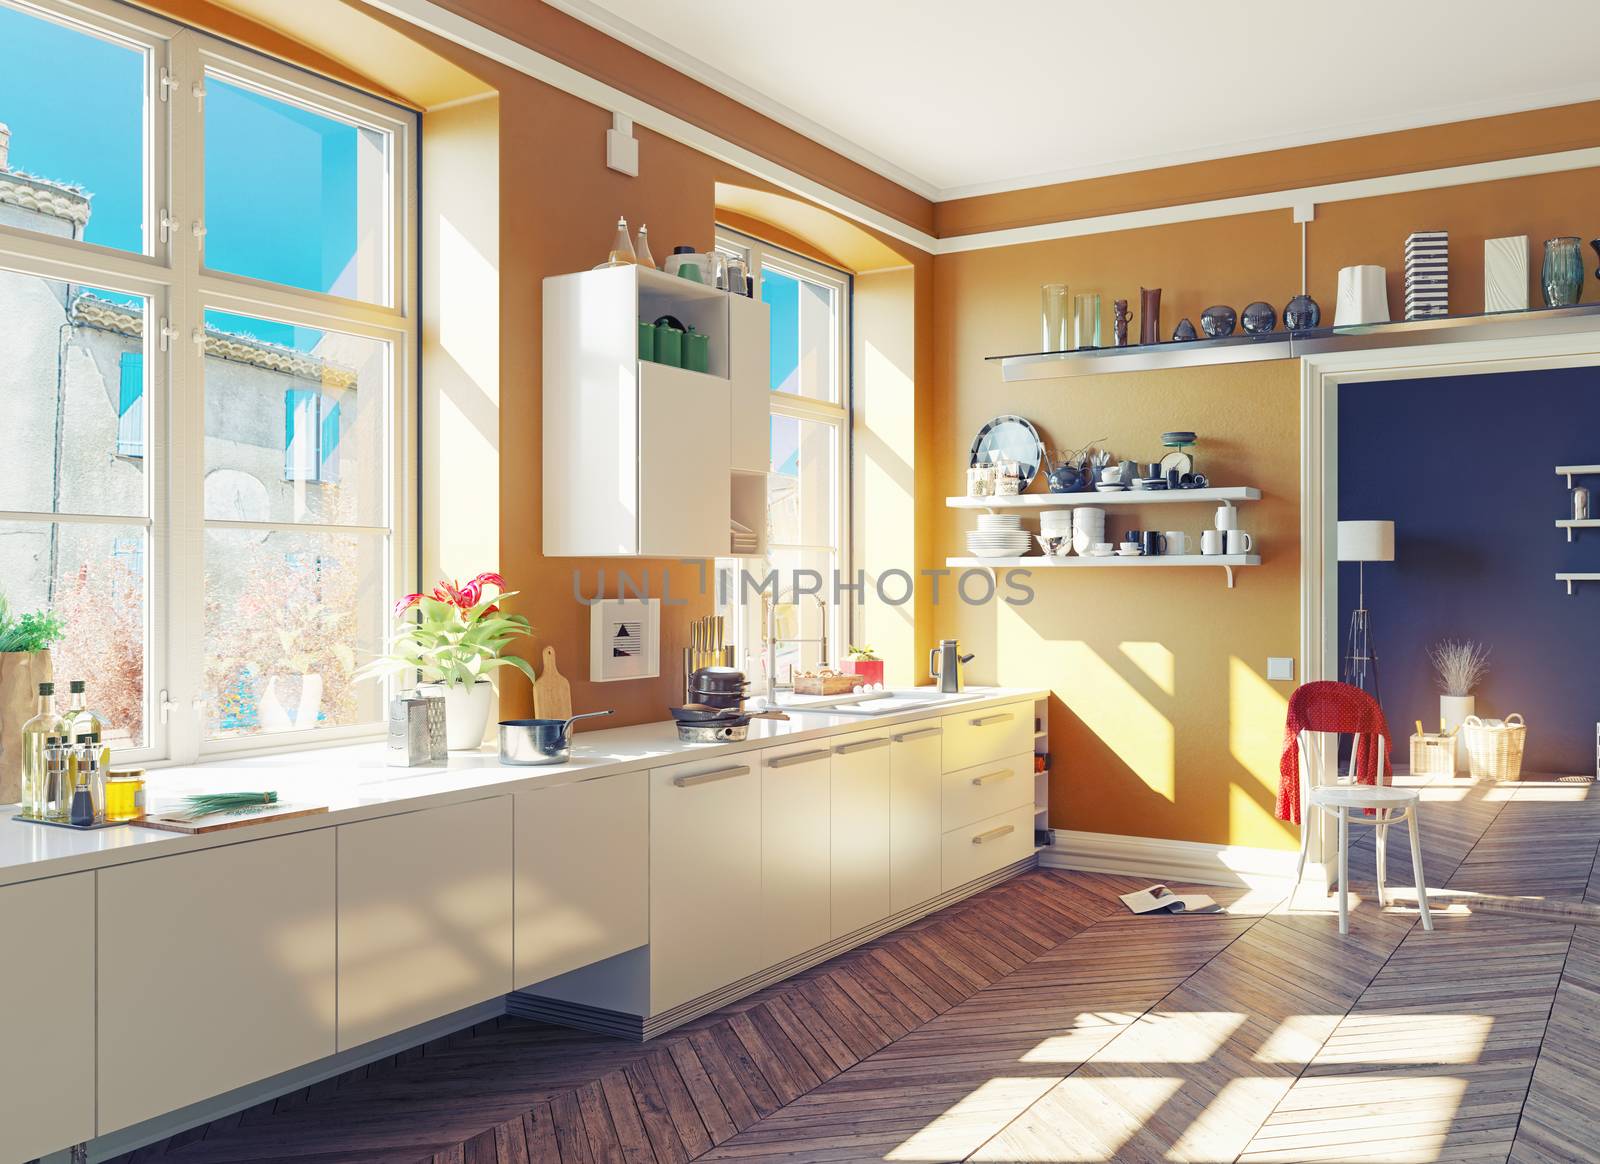 kitchen interior by vicnt